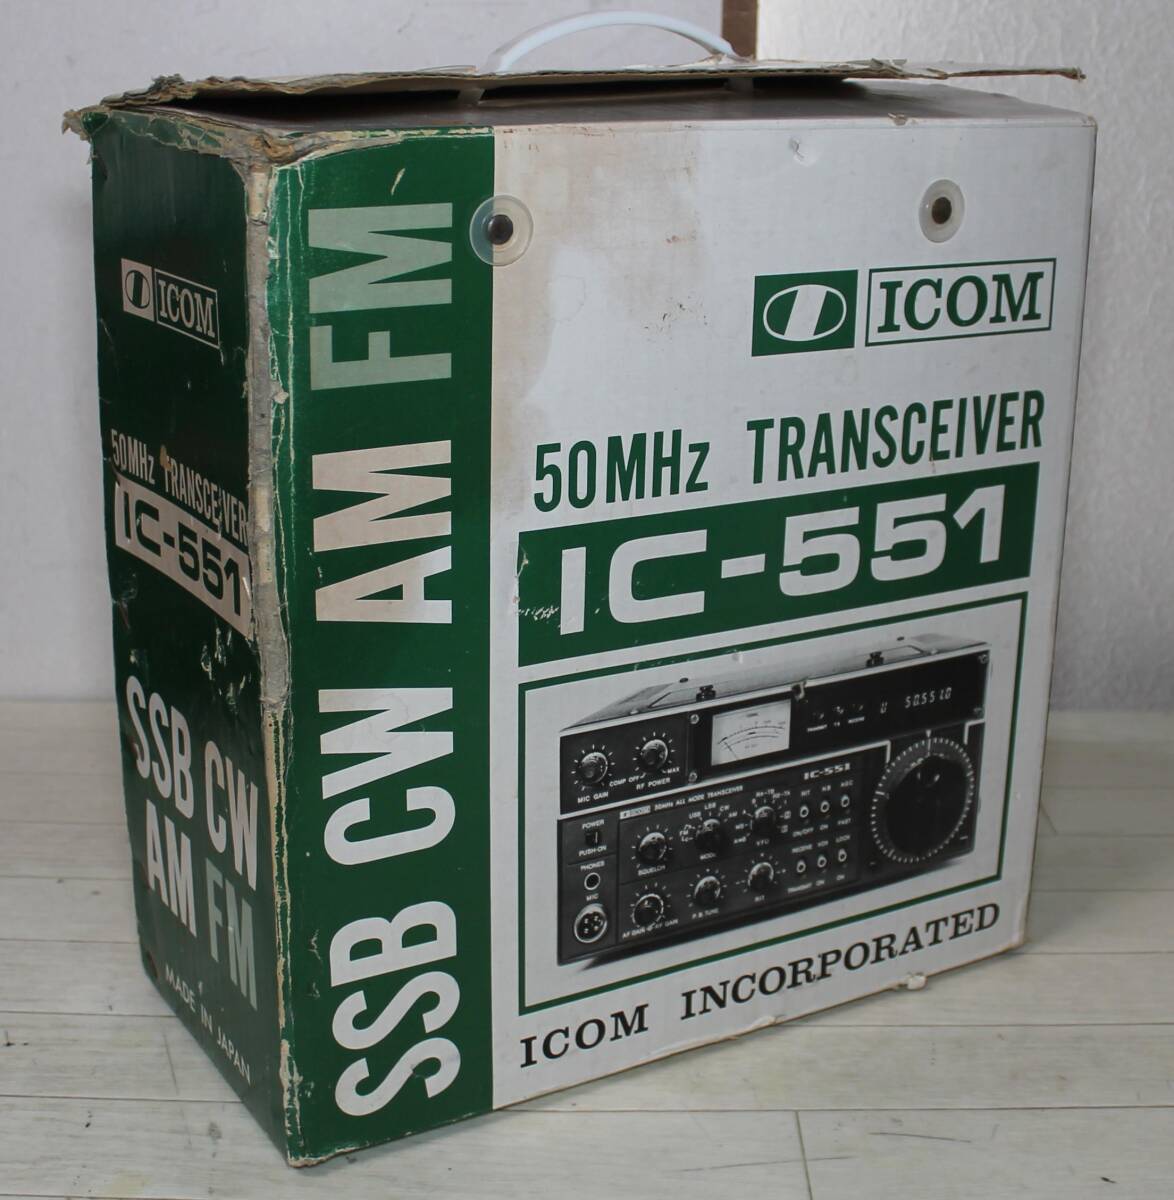 ICOM Icom 50MHz transceiver IC-551 Junk [W31]